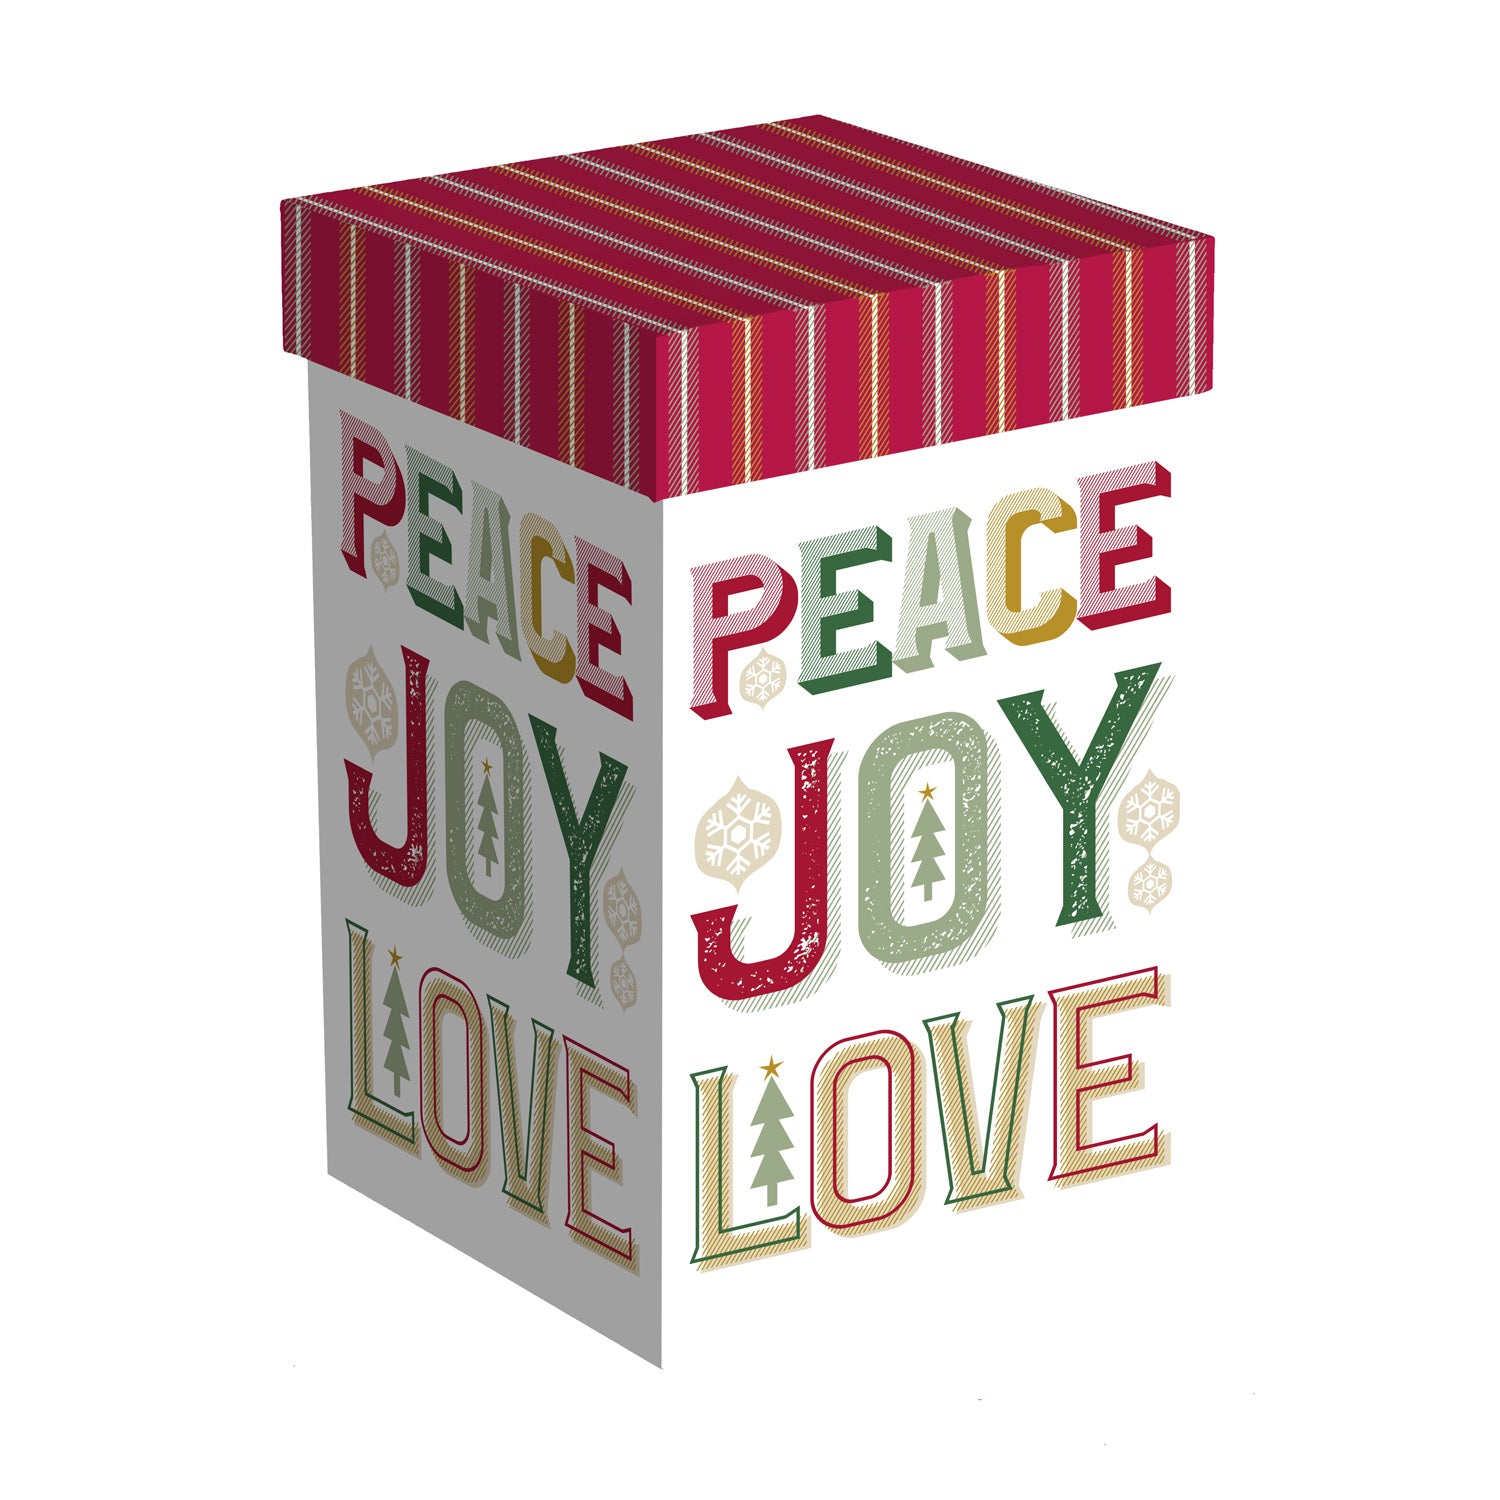 Sale Ceramic Travel Cup w/Box Peace, Love & Joy